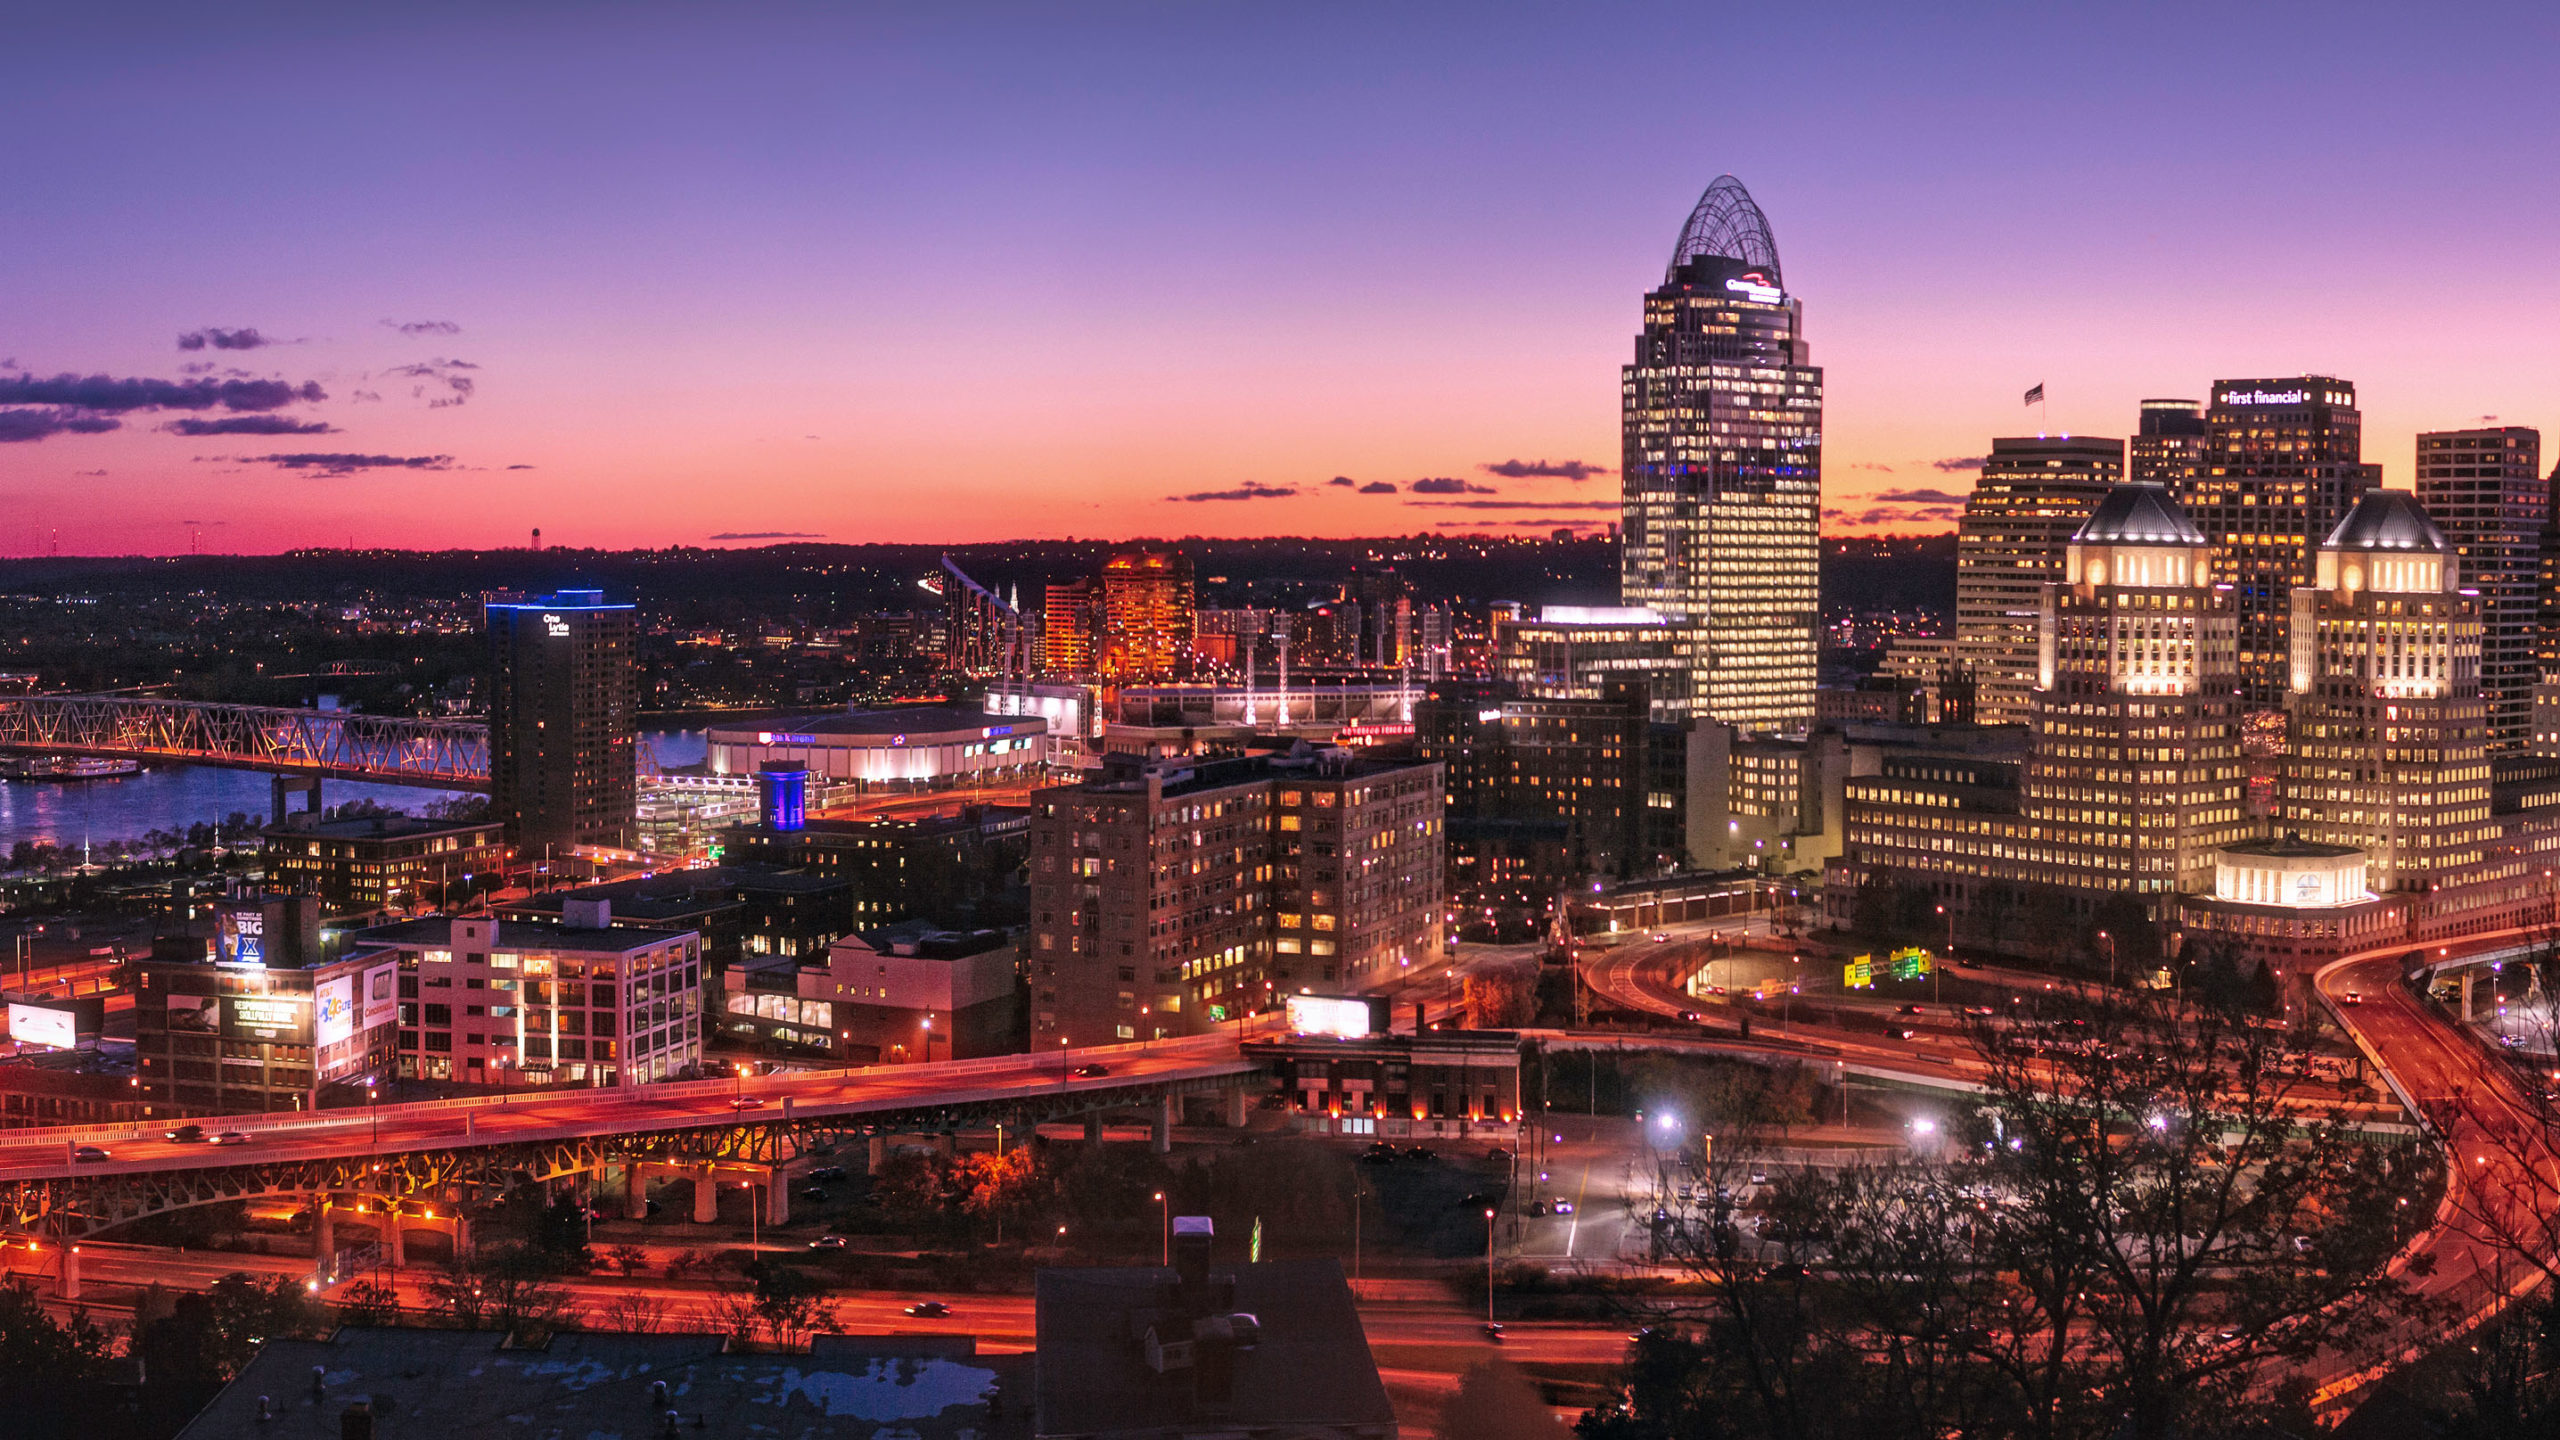 Nighttime Cincinnati Skyline with Purple Sky and City Lights